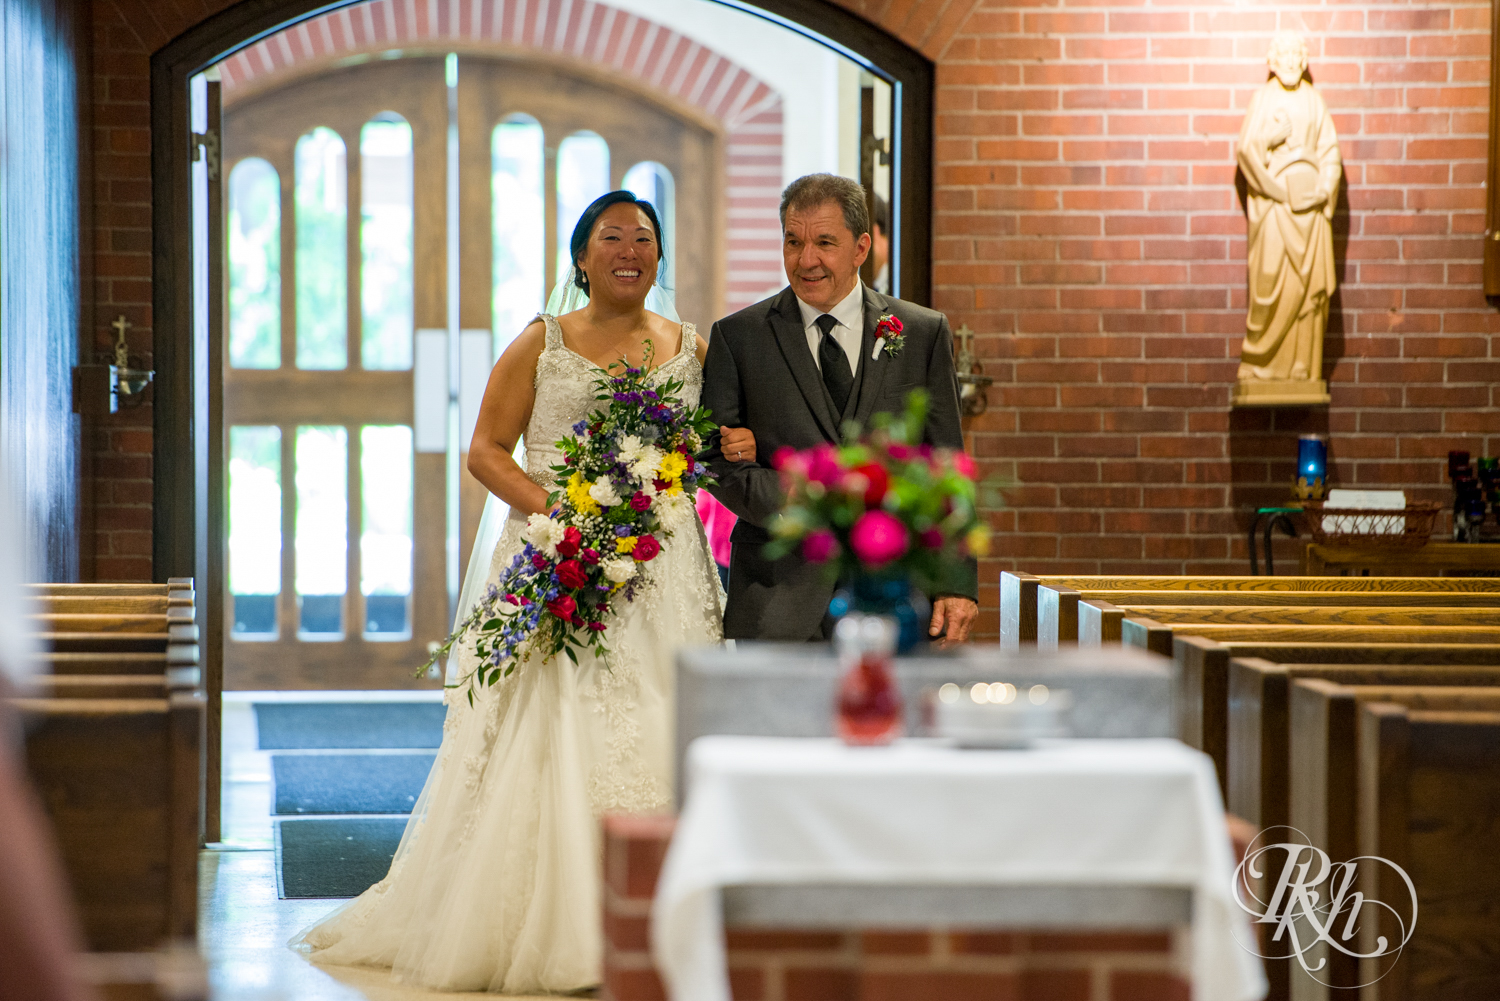 Bride and dad walk down the aisle in church wedding in Minneapolis, Minnesota.